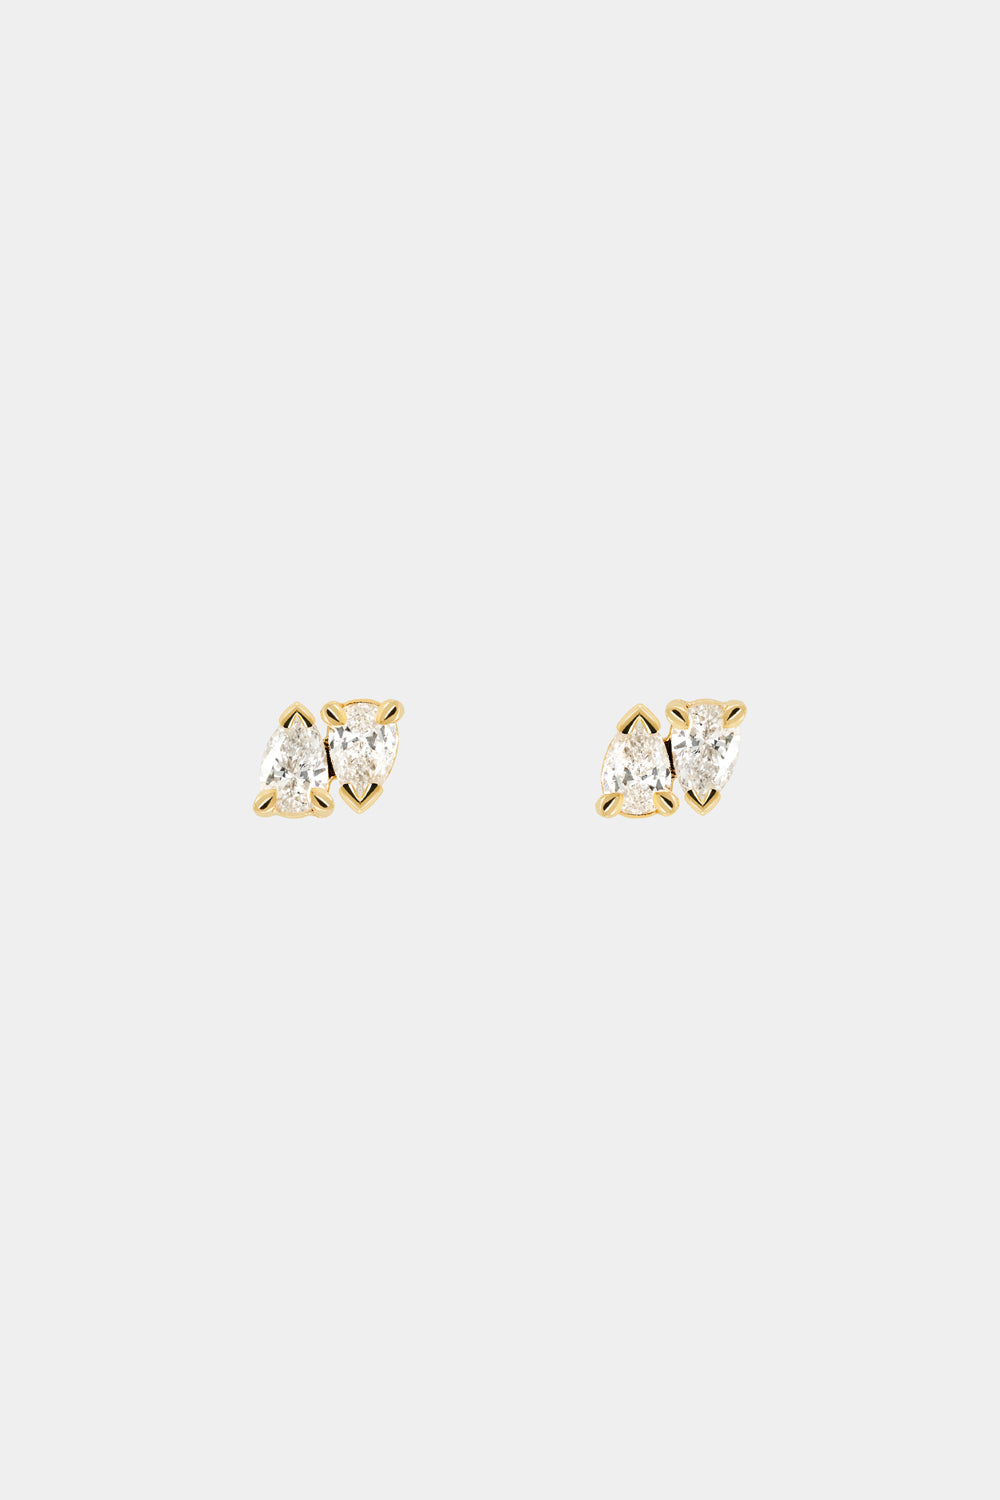 Verona Earrings | 18K Yellow Gold